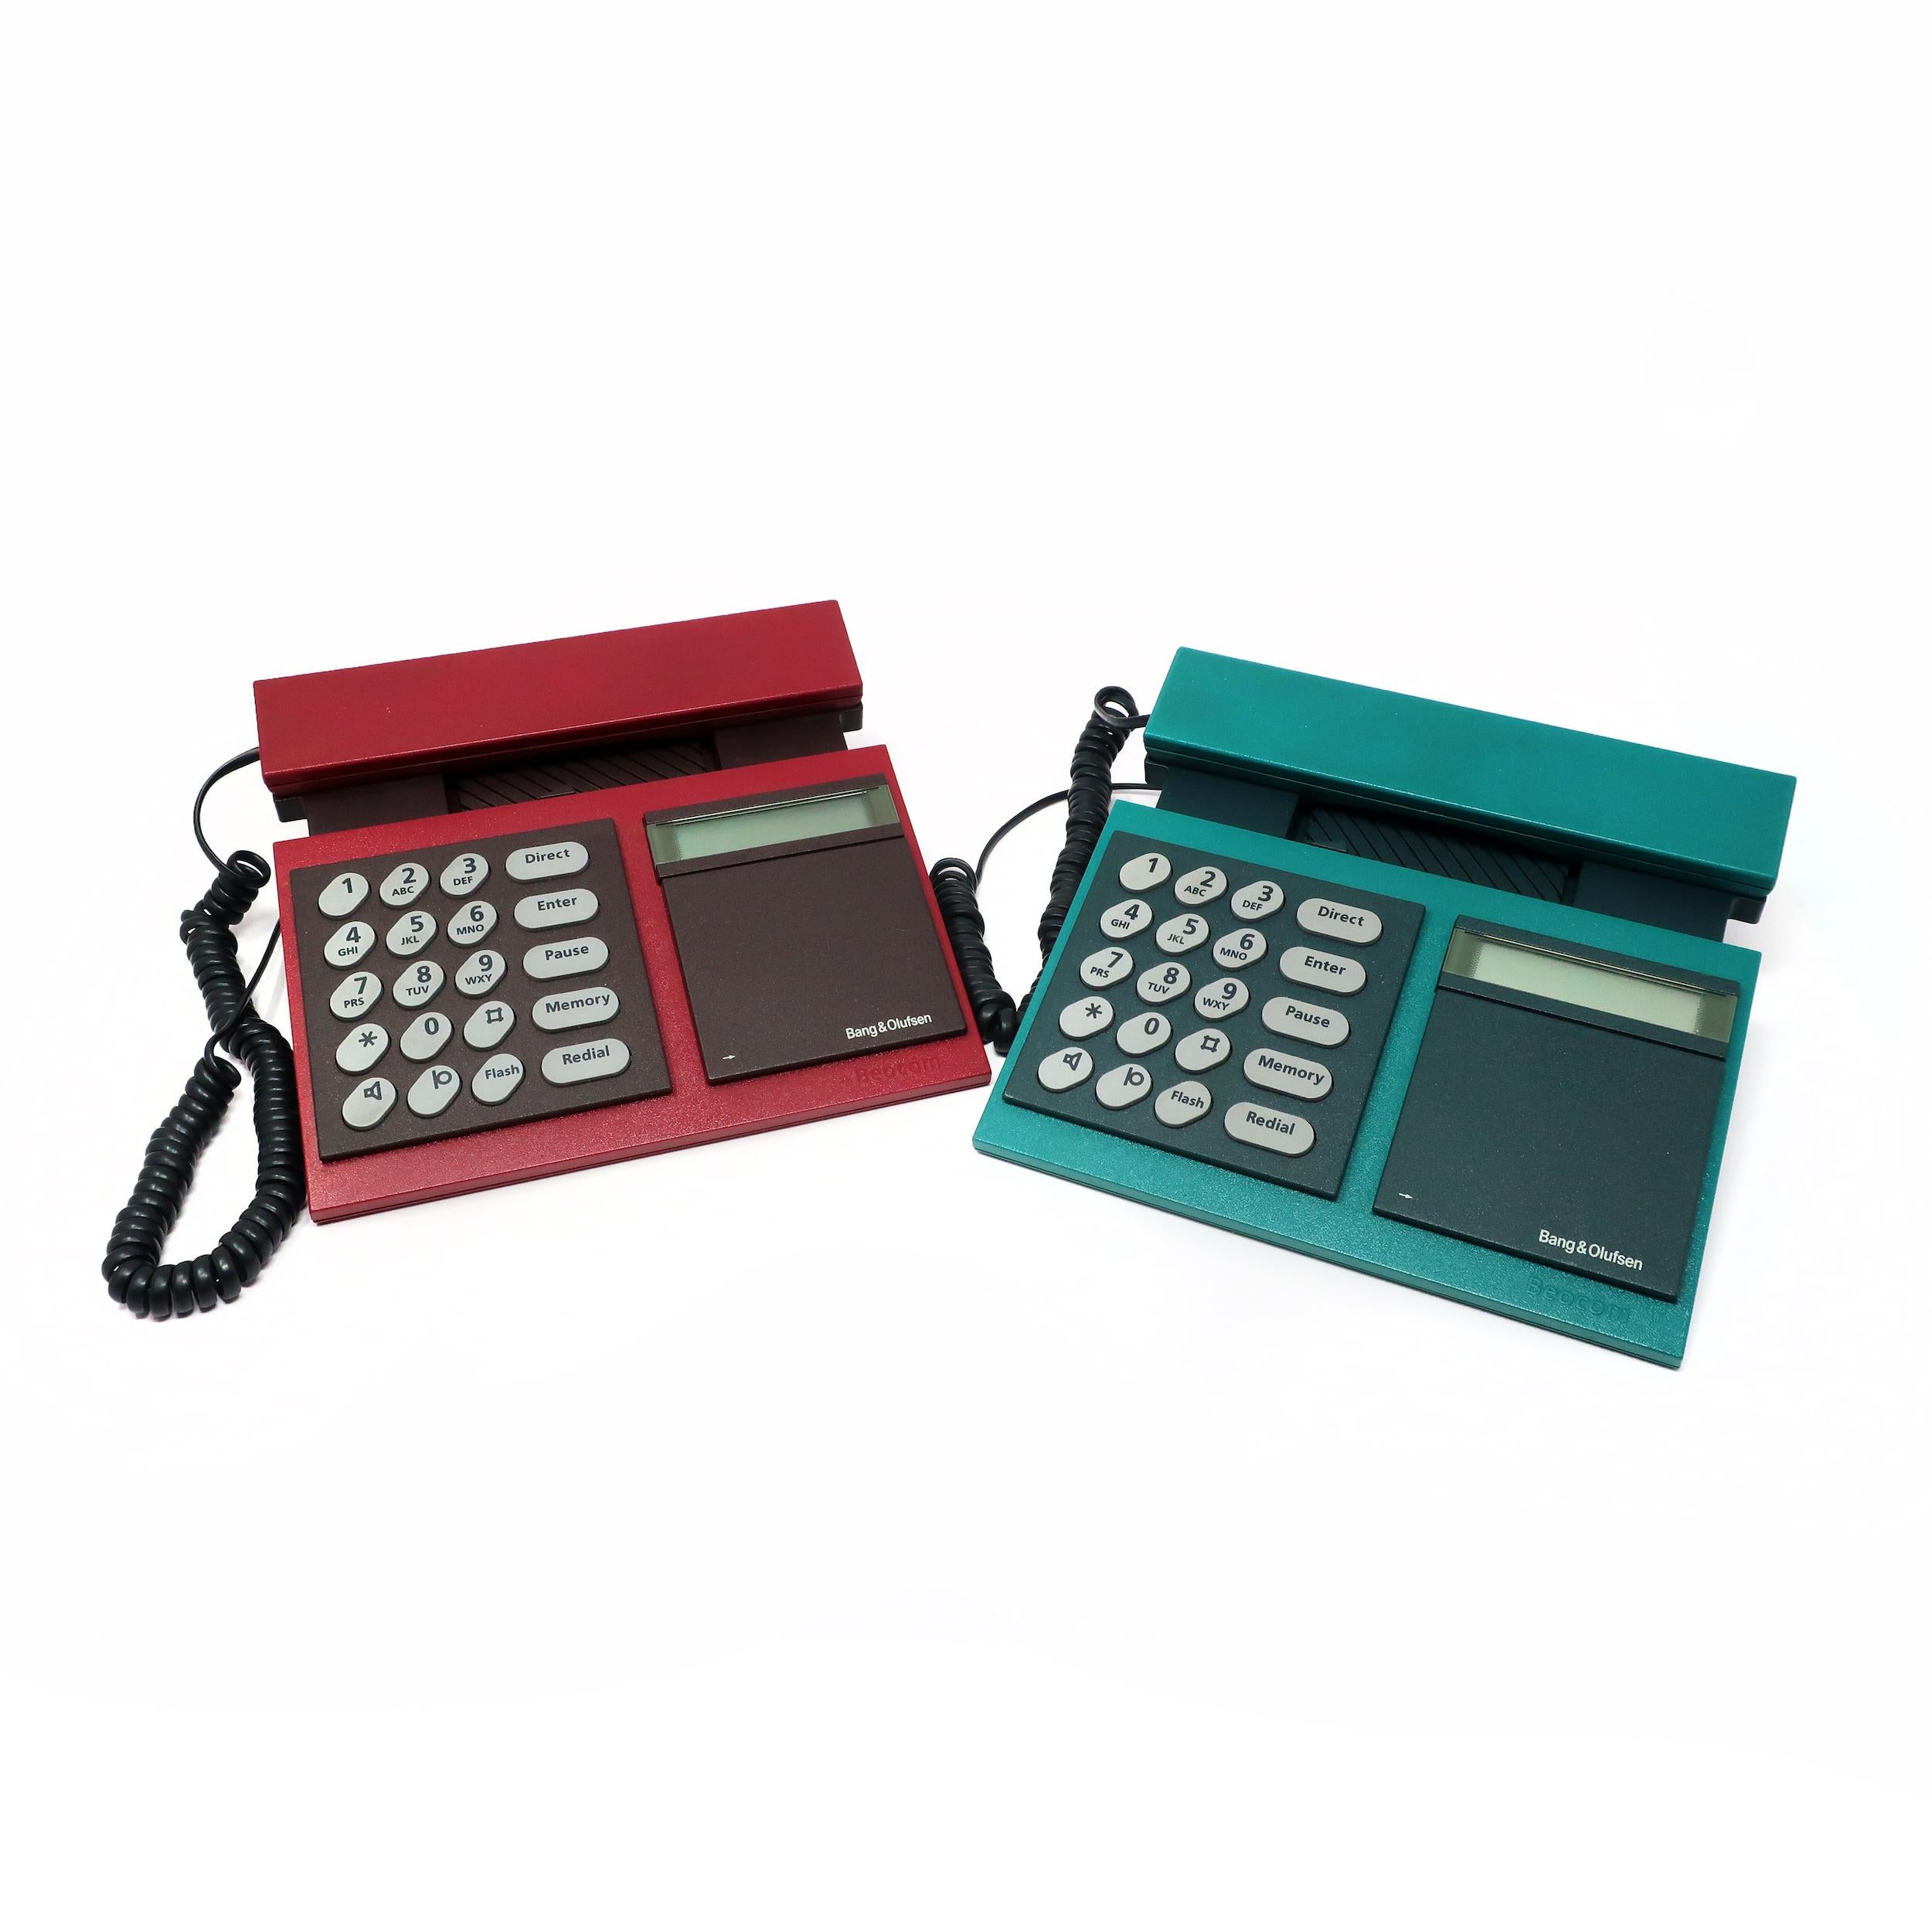 téléphone Beocom 2000 Bang & Olufsen des années 1980 Bon état - En vente à Brooklyn, NY